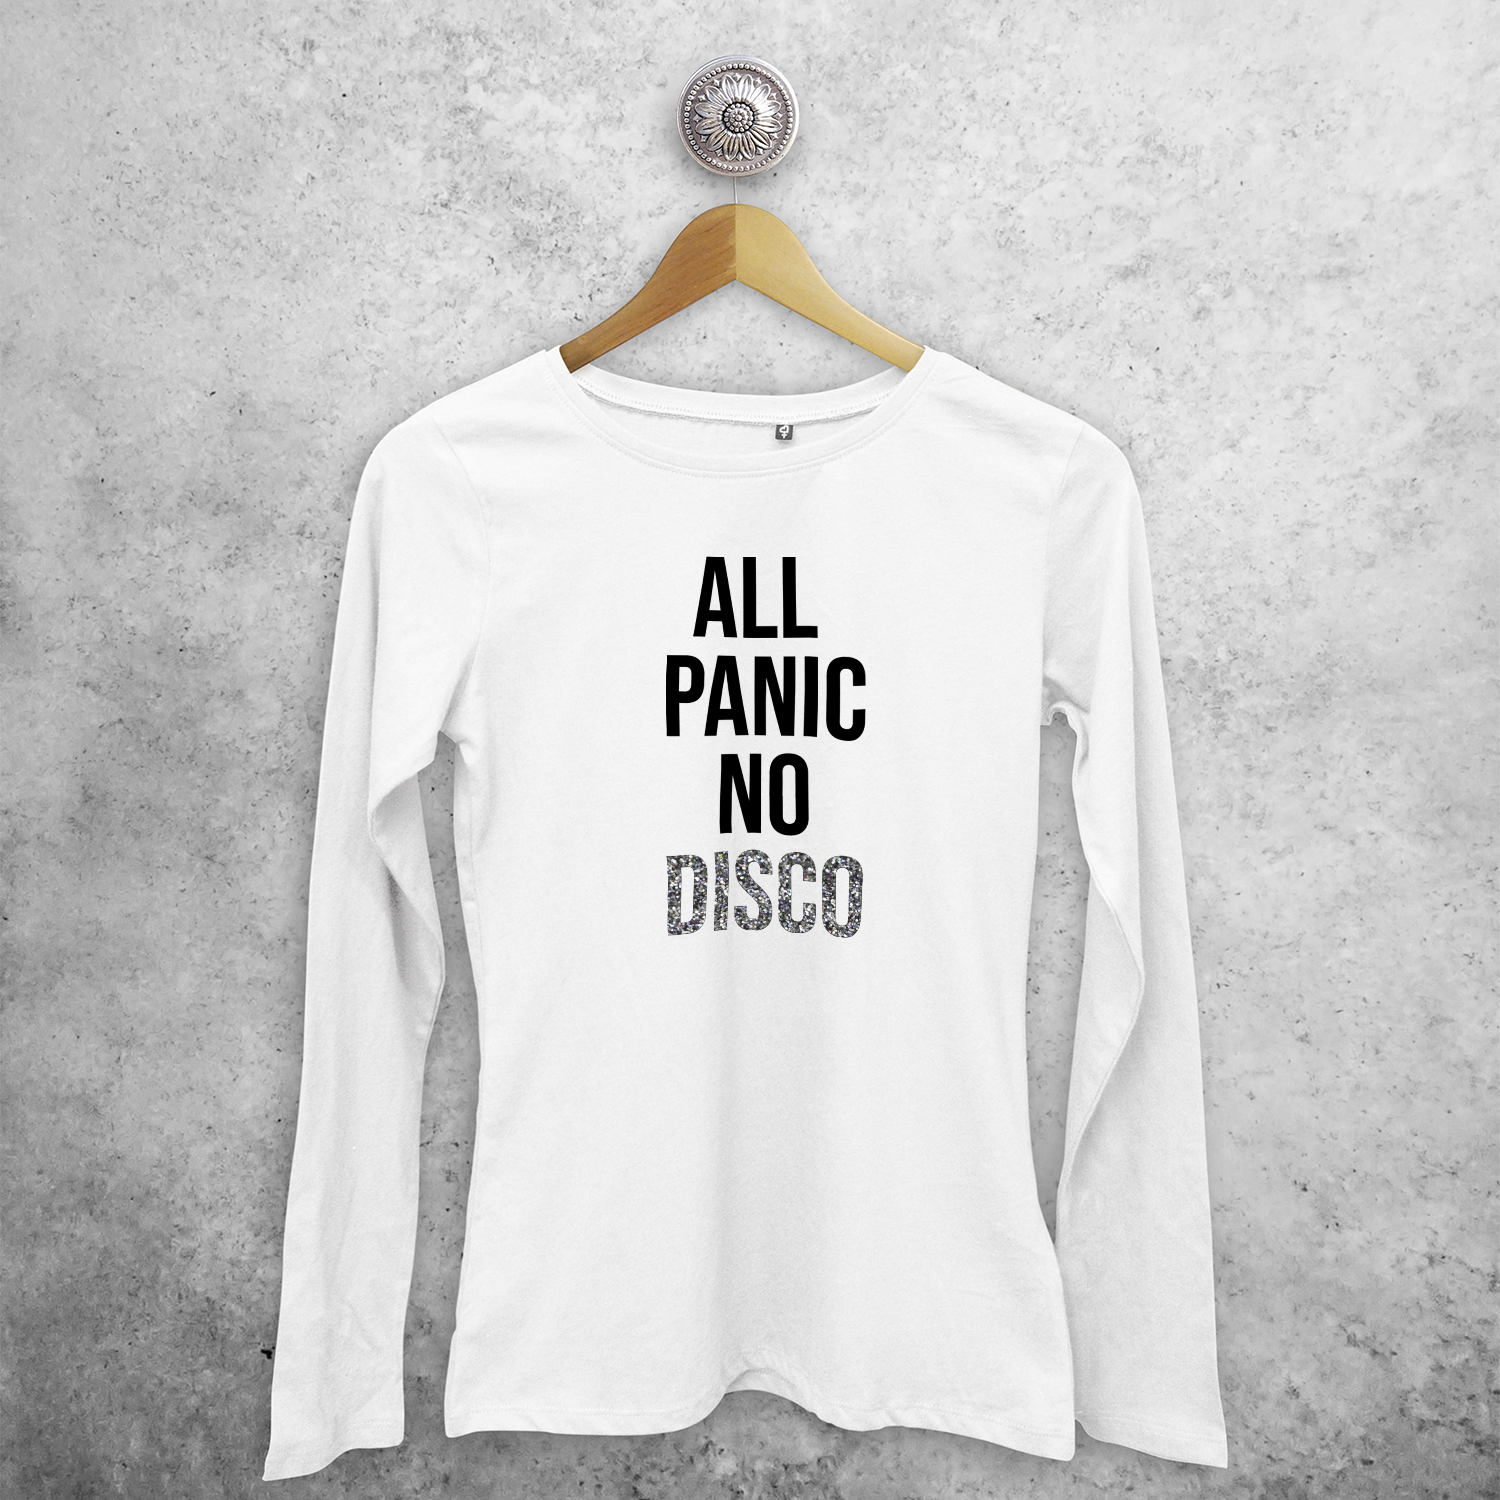 'All panic no disco' adult longsleeve shirt